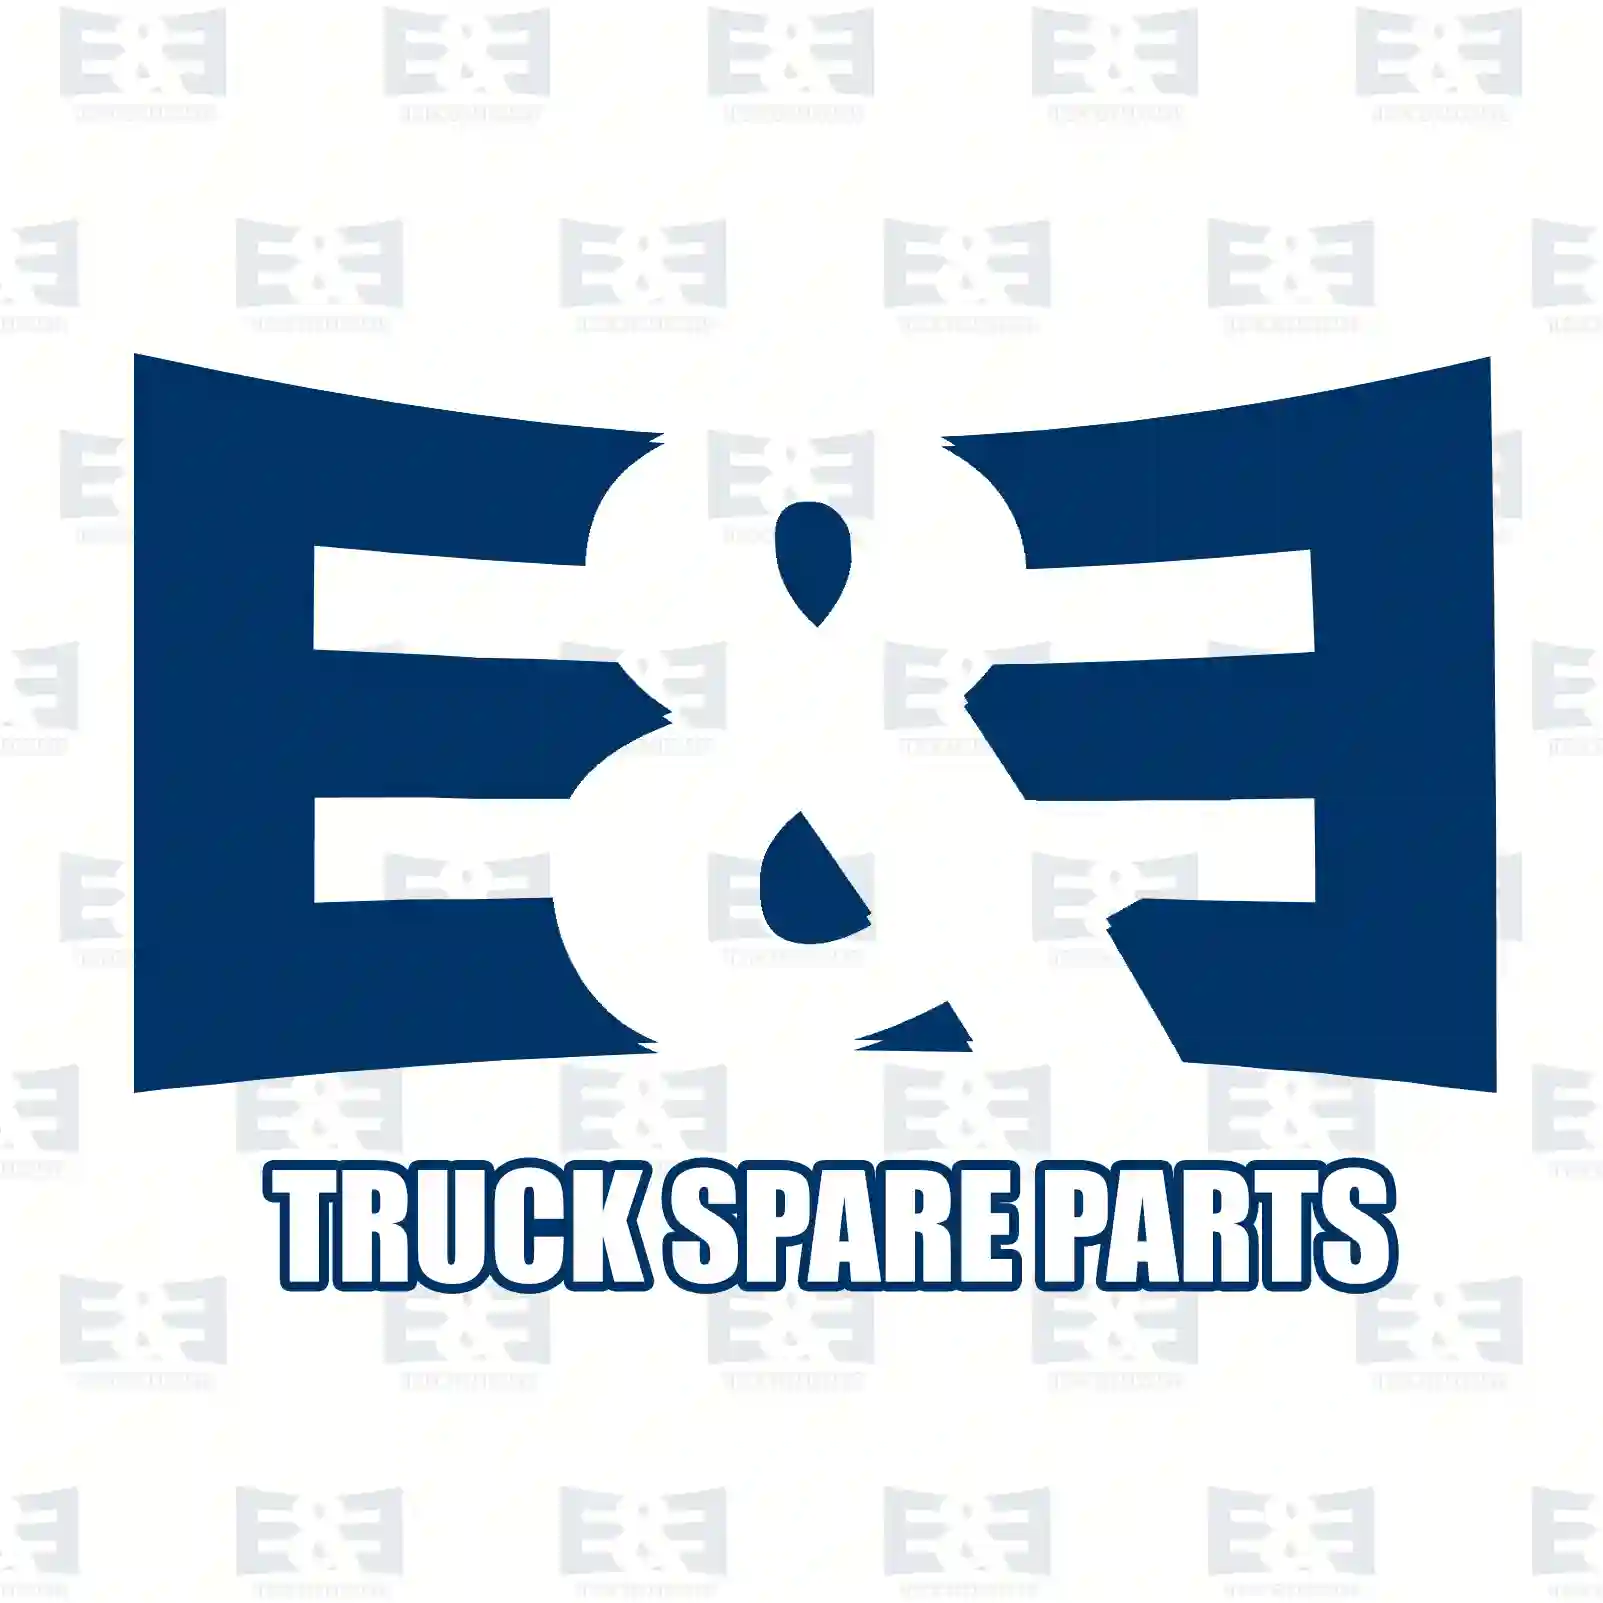 Engine mounting, 2E2208661, 9612411213, 96224 ||  2E2208661 E&E Truck Spare Parts | Truck Spare Parts, Auotomotive Spare Parts Engine mounting, 2E2208661, 9612411213, 96224 ||  2E2208661 E&E Truck Spare Parts | Truck Spare Parts, Auotomotive Spare Parts